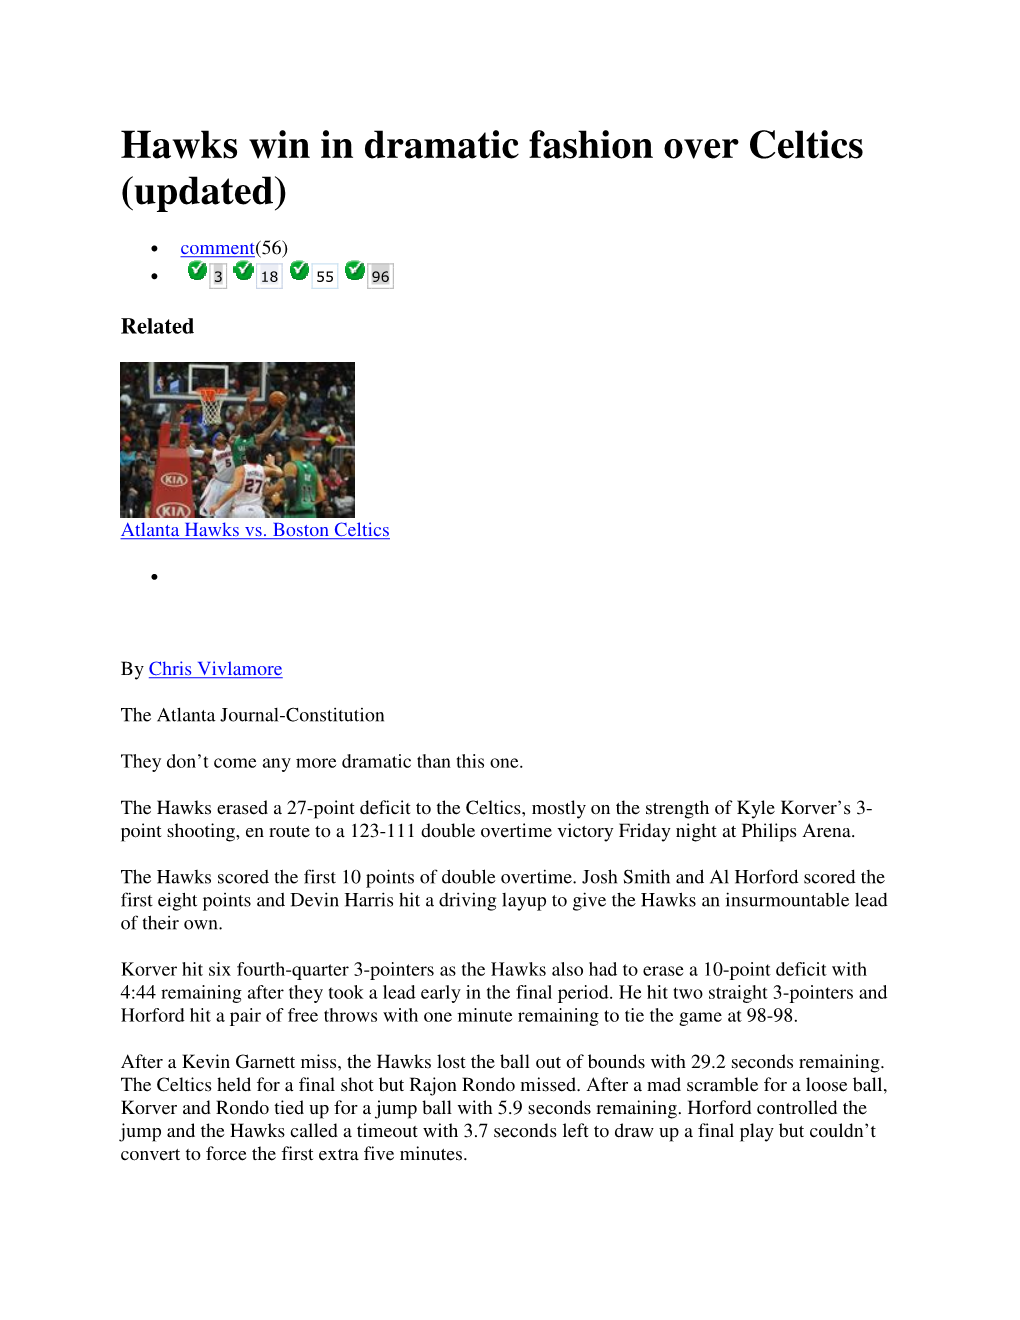 Hawks Win in Dramatic Fashion Over Celtics (Updated)